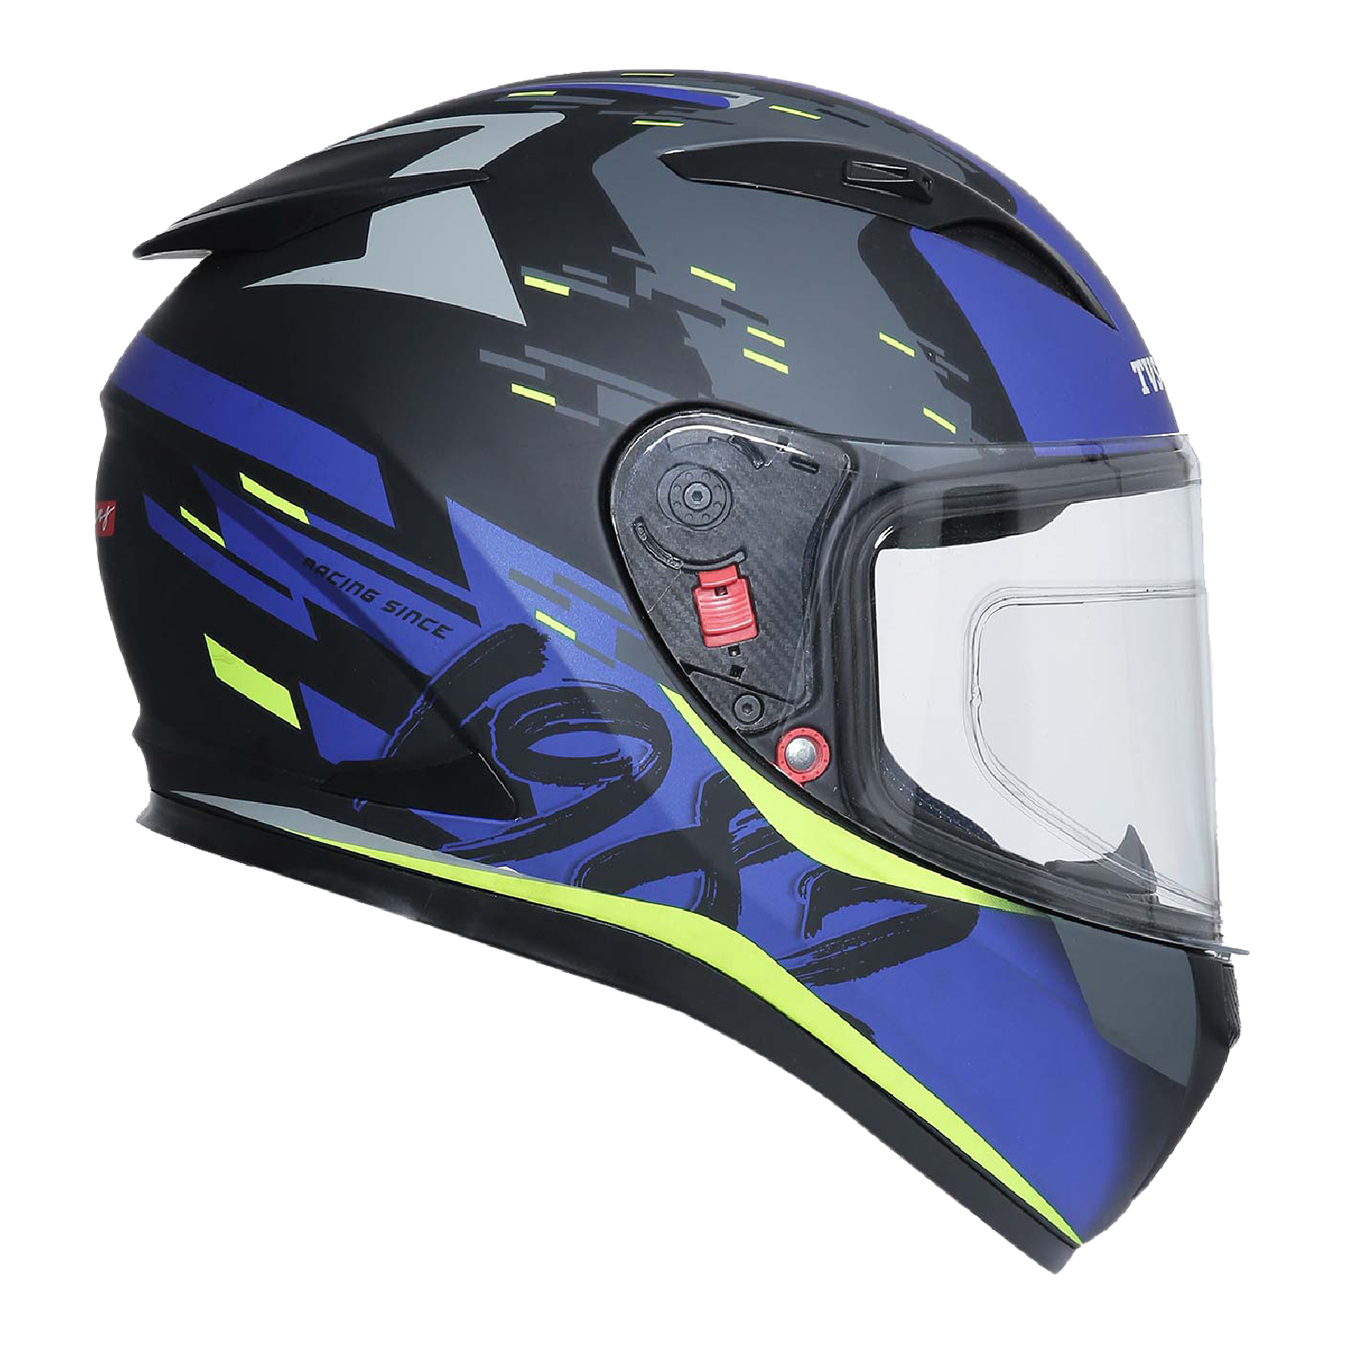 TVS Racing Helmet for Men – Anti-Fog Pin-Lock, Aerodynamic Design & DOT/ISI/ECE Certified – Premium Bike Helmet with Secure Fastening (Blue & Neon)